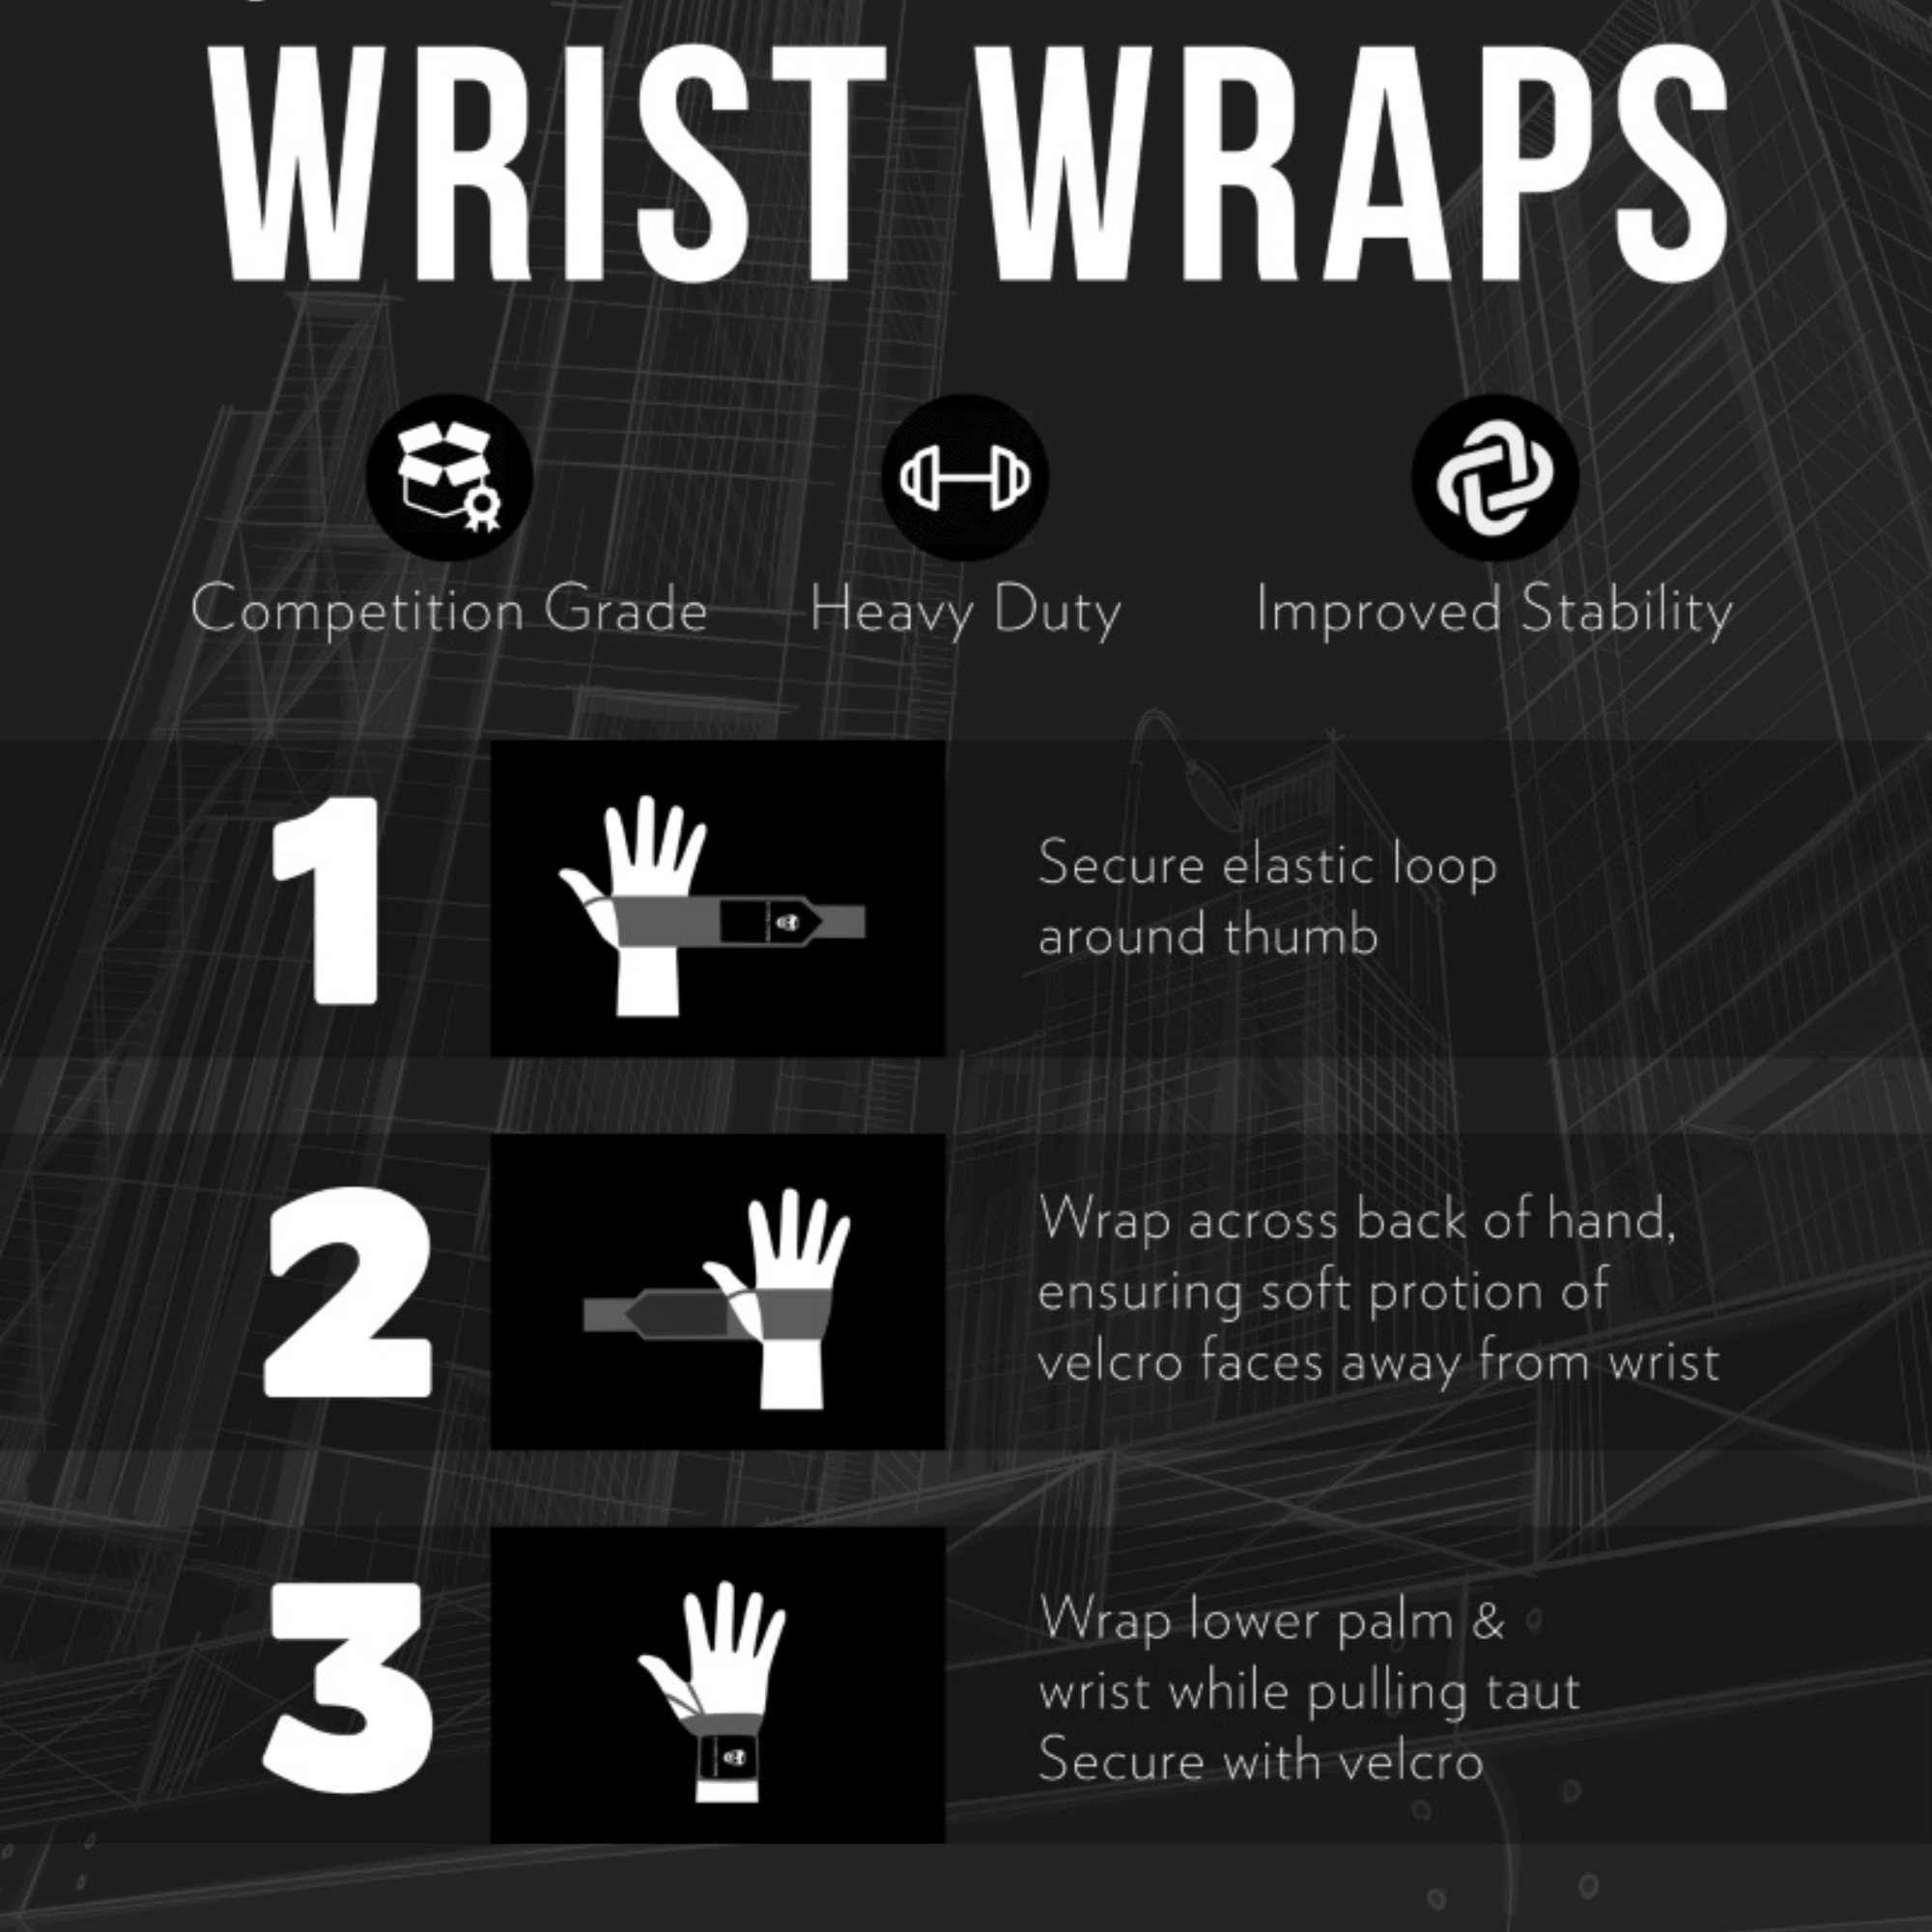 Wrist wraps how to guide